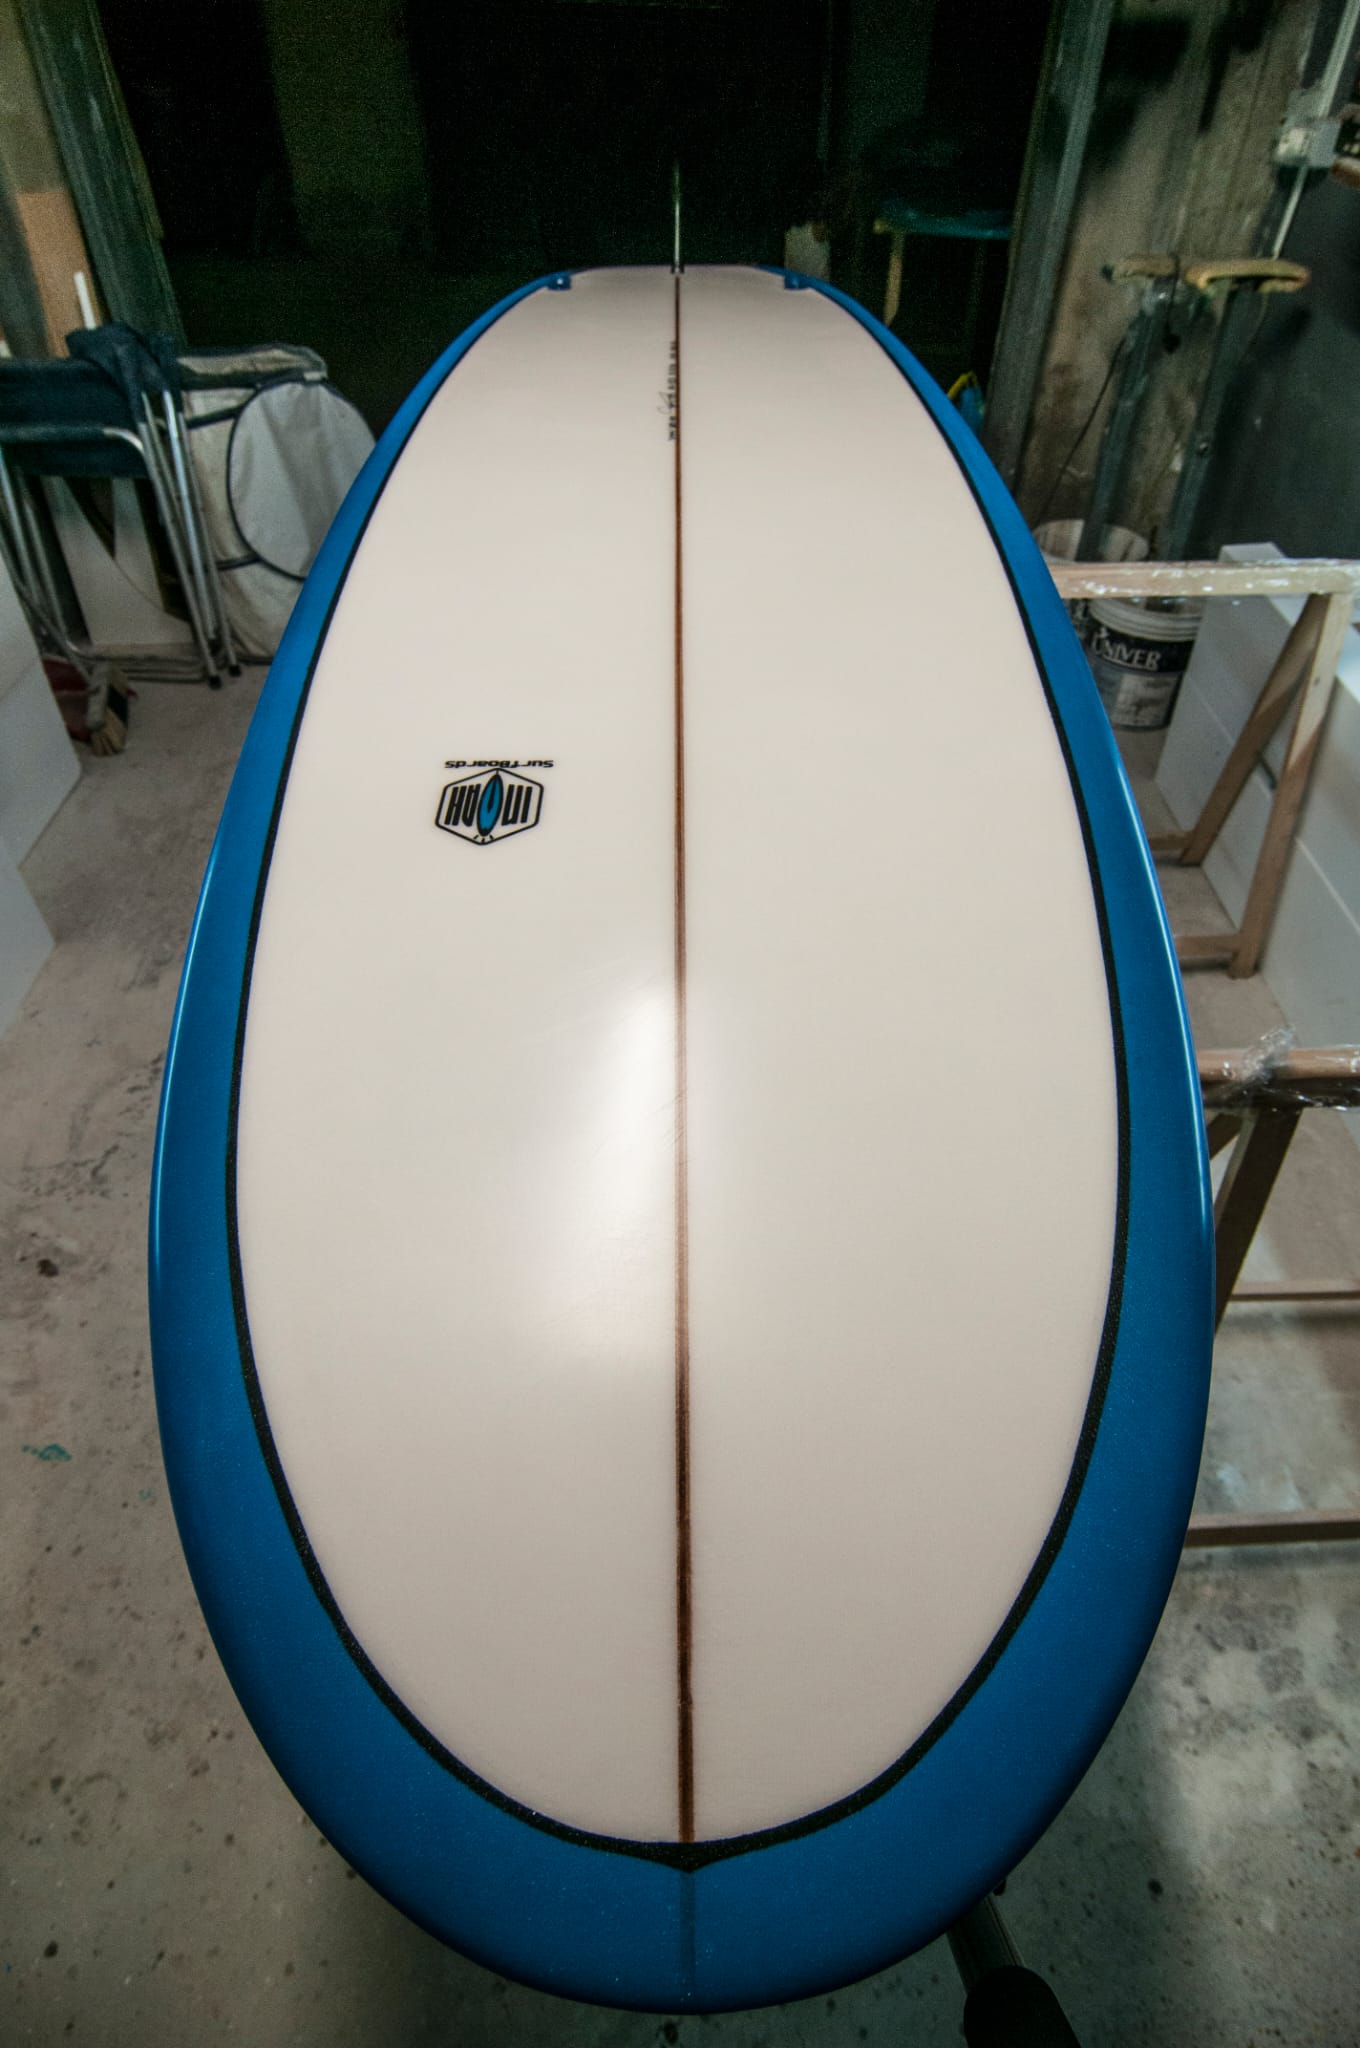 Tavola surf INOAH 7'4" Mini Malibu Cochise